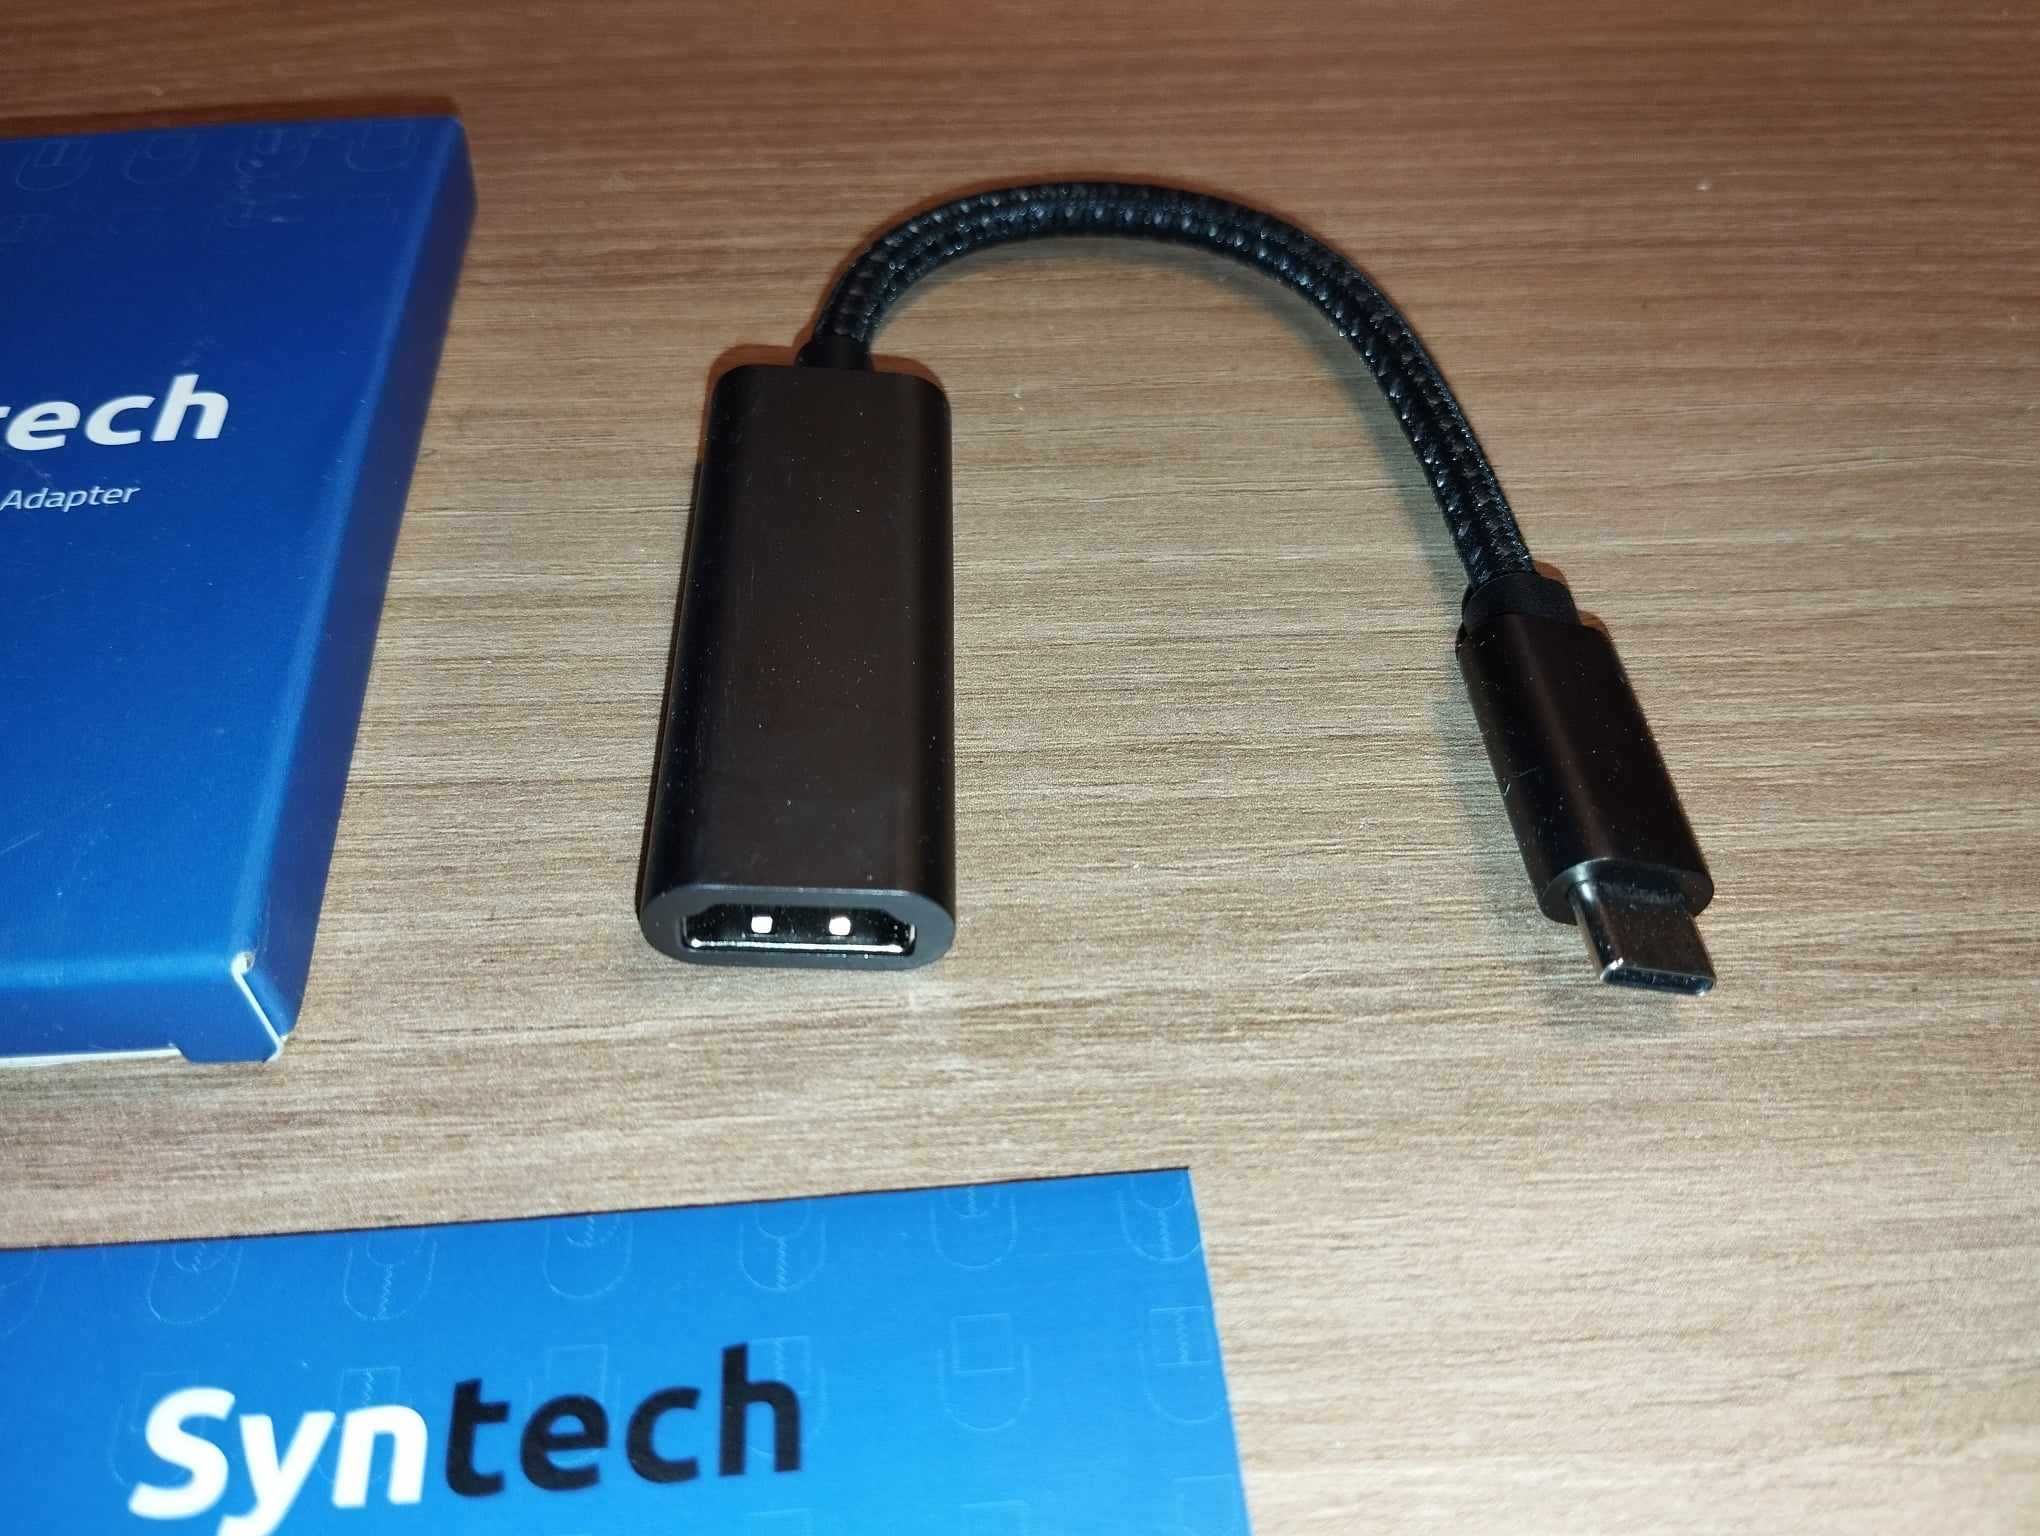 SynTech - USB-C / HDMI - Adapter